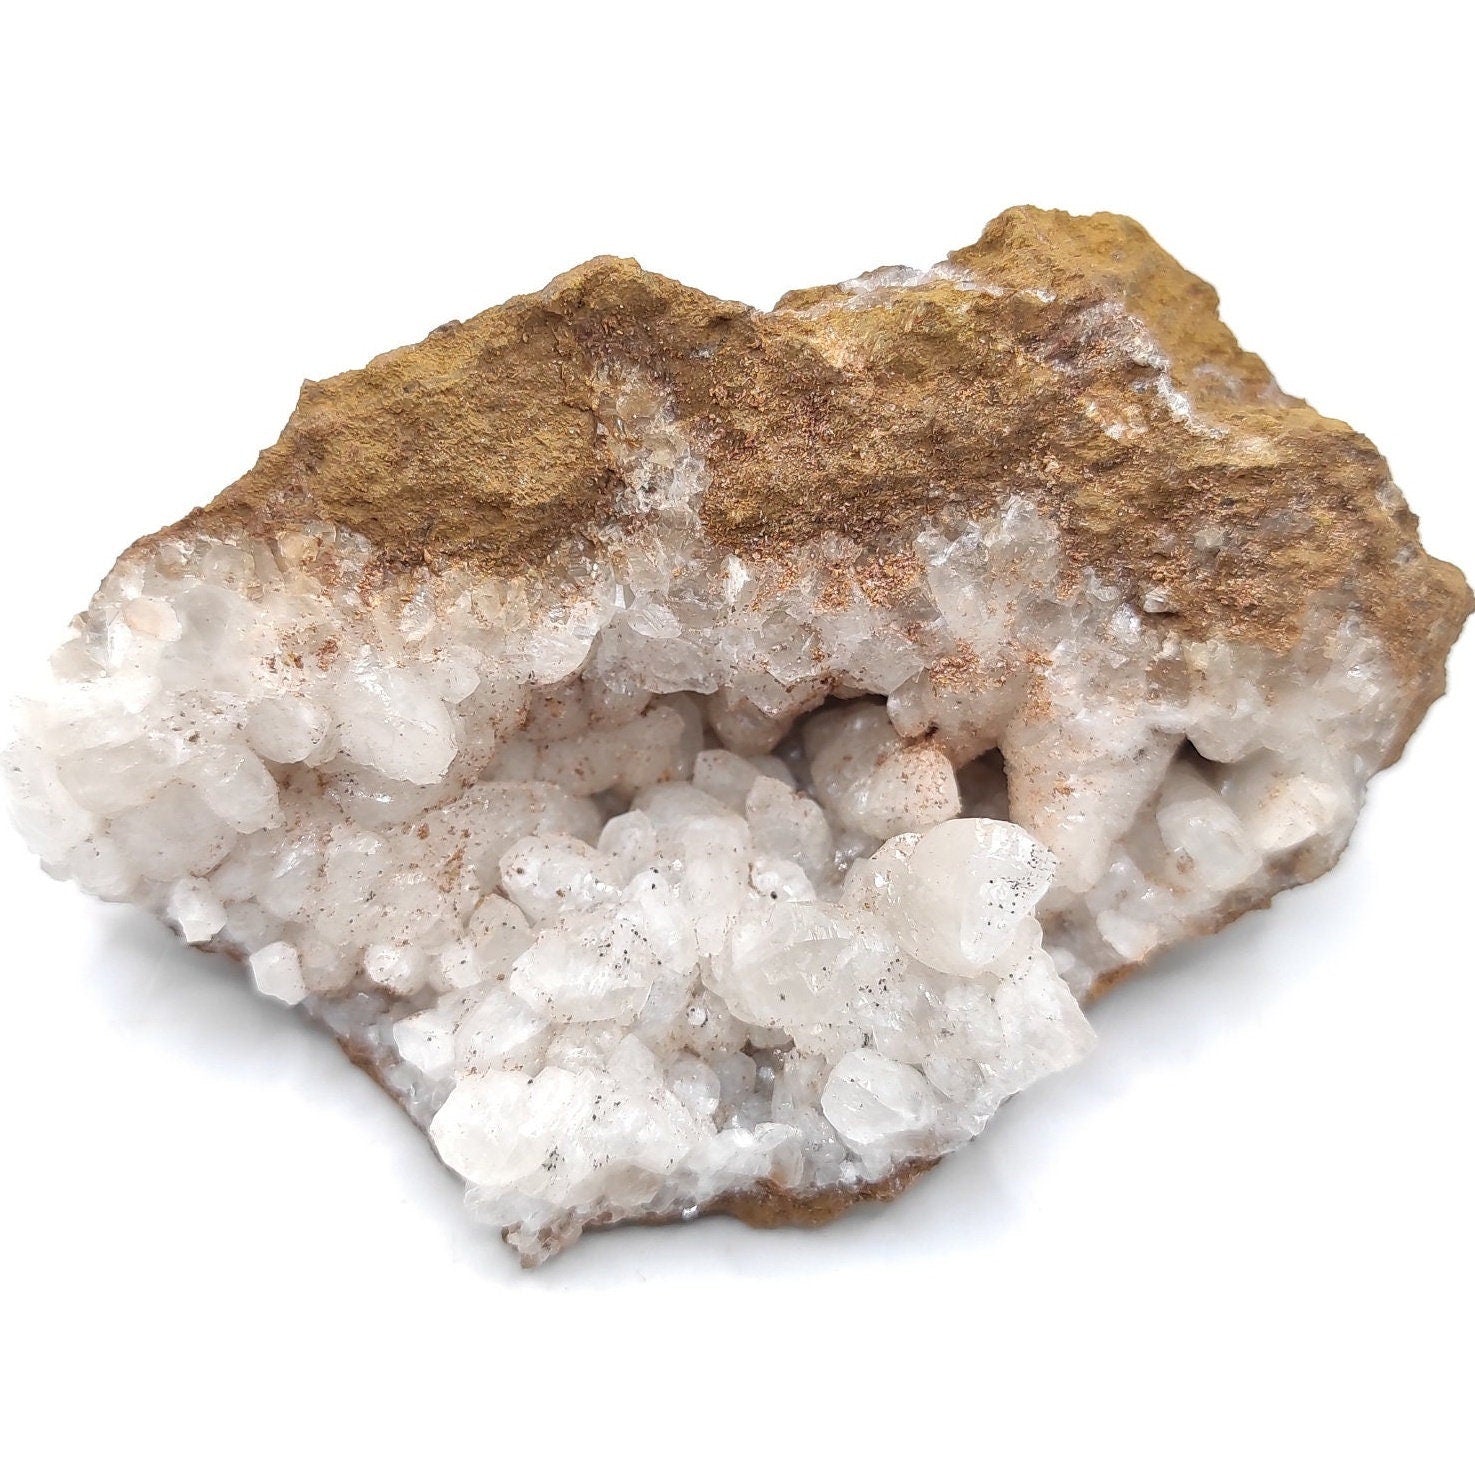 93g UV Reactive Calcite - Phosphorescent Calcite Specimen - Cambridge Cove, Nova Scotia, Canada - UV Minerals - Minerals with Afterglow